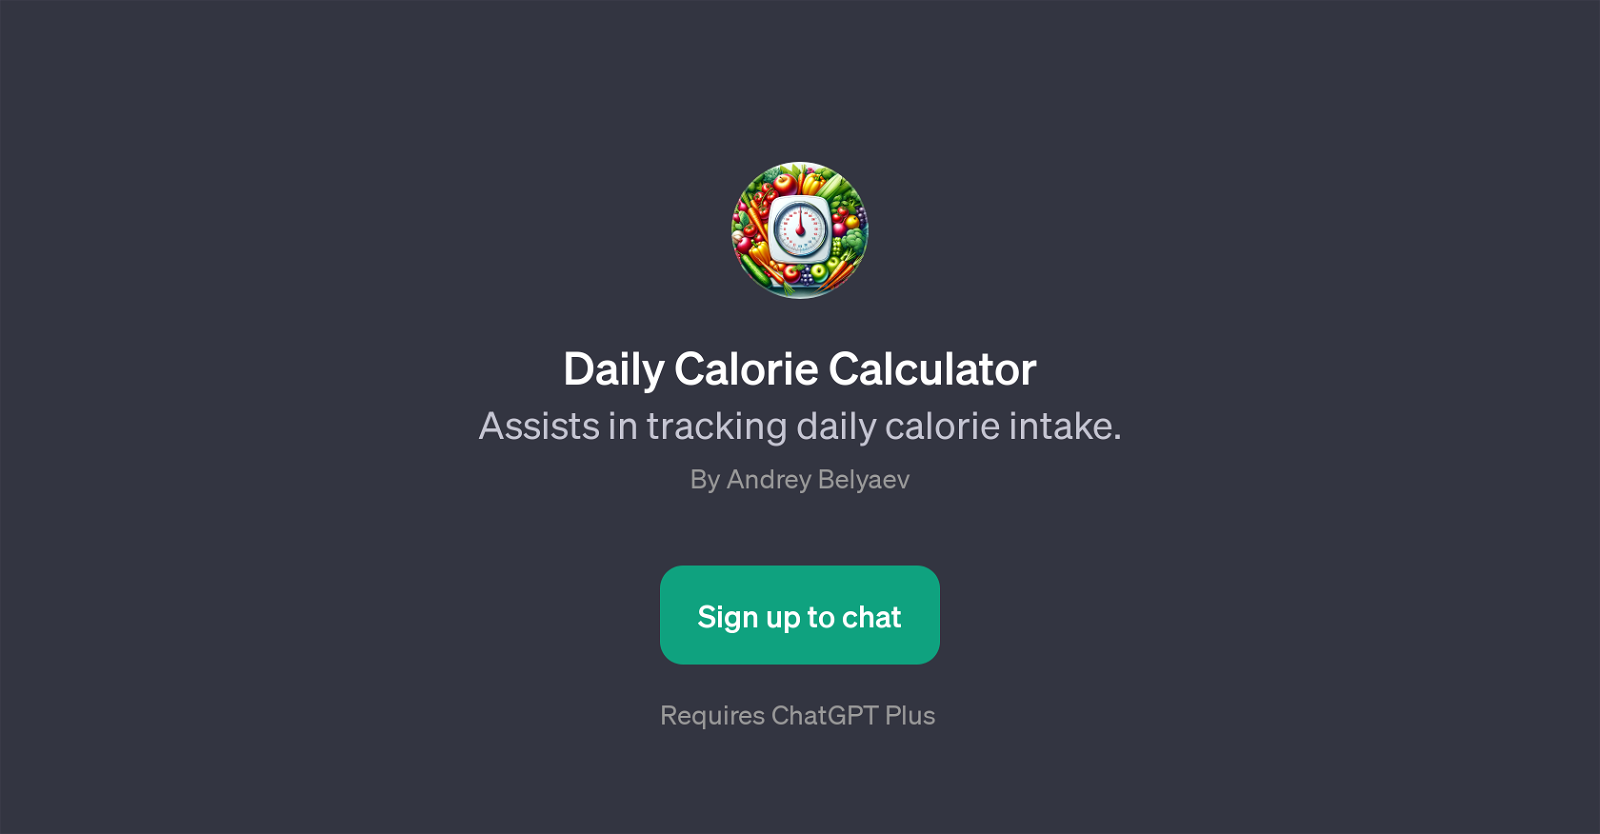 Daily Calorie Calculator website